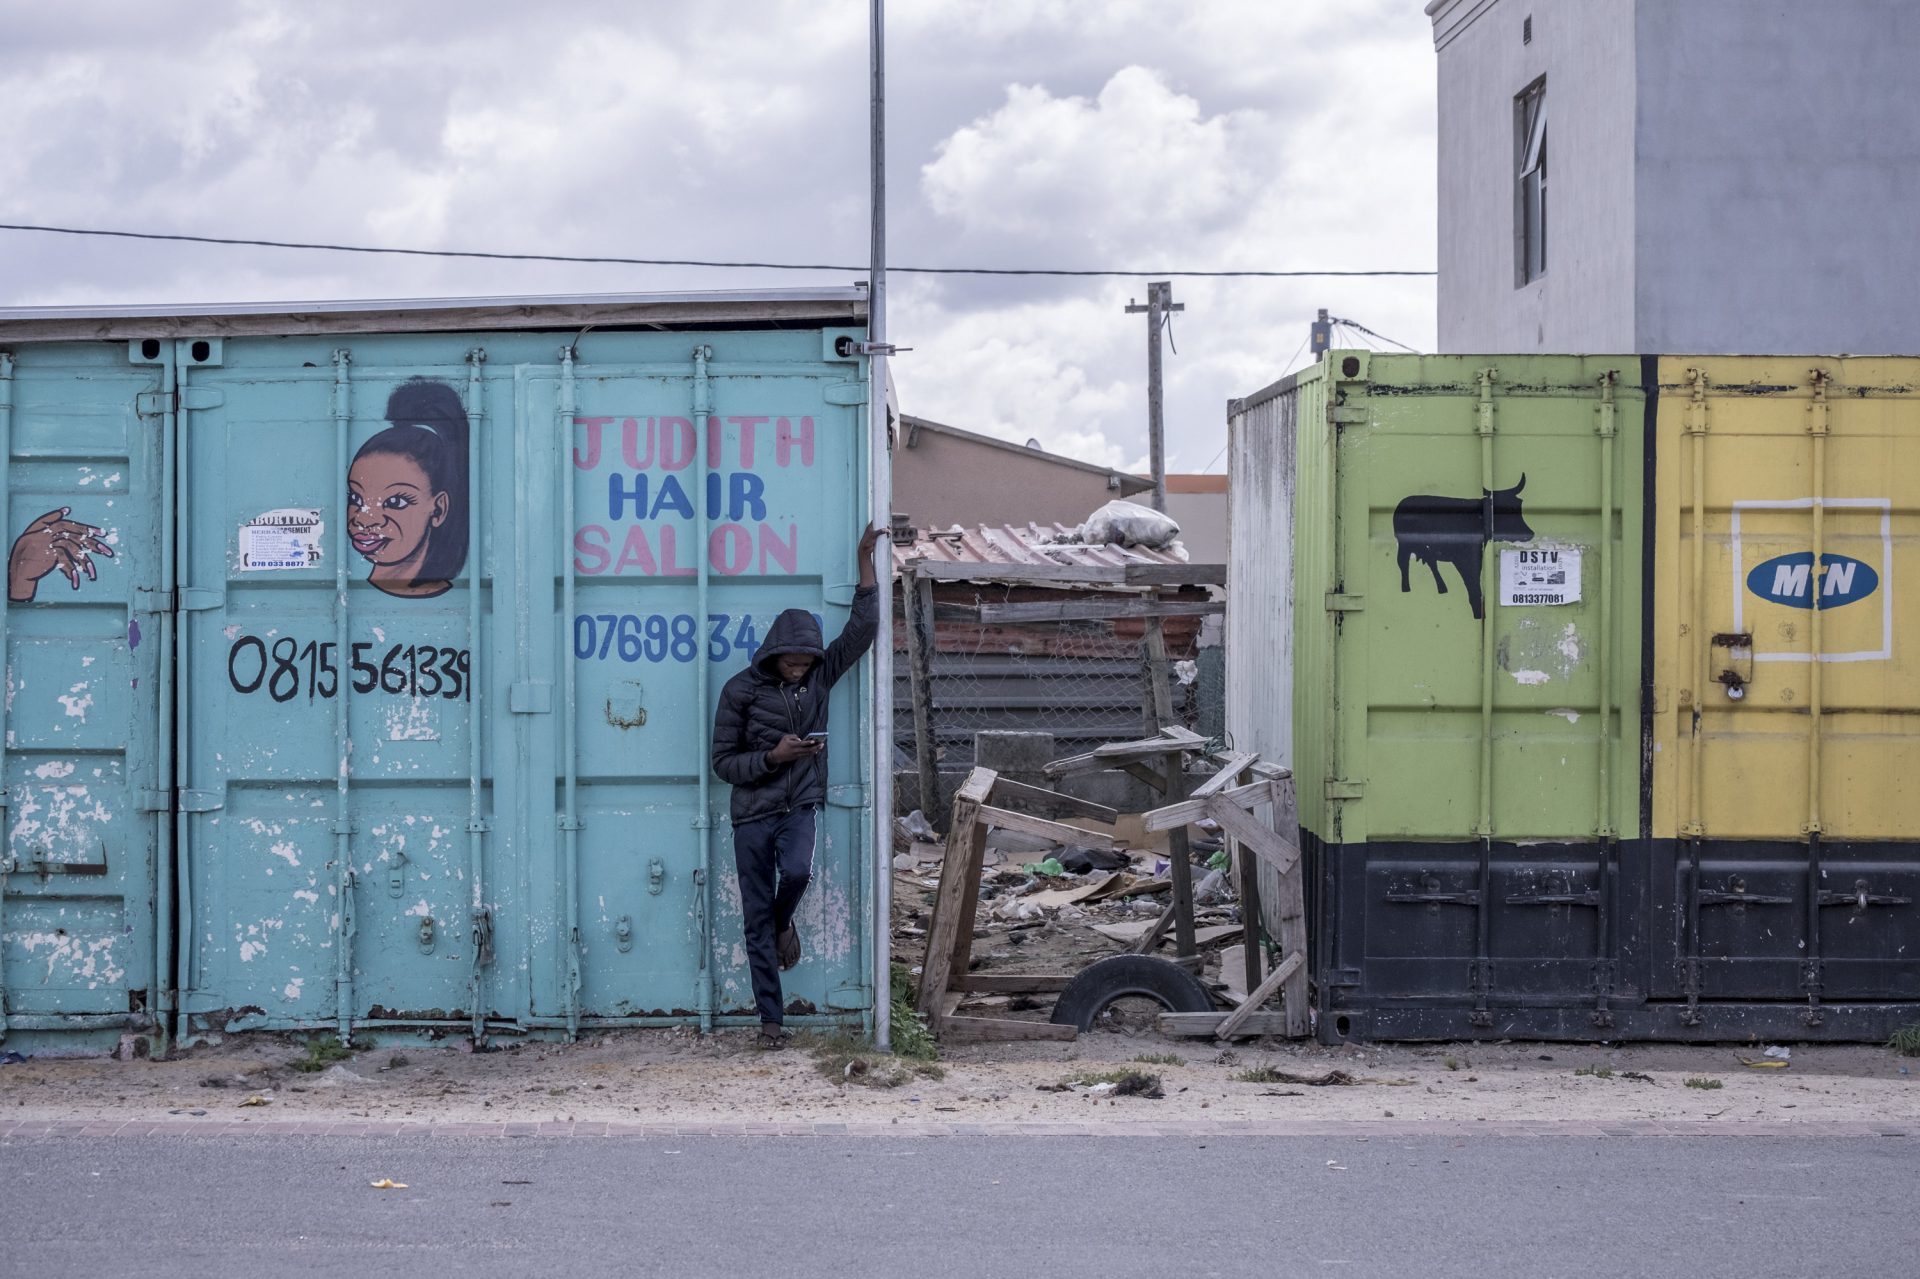 A boy checks his phone outside a shuttered hair salon in the township of Khayelitsha.